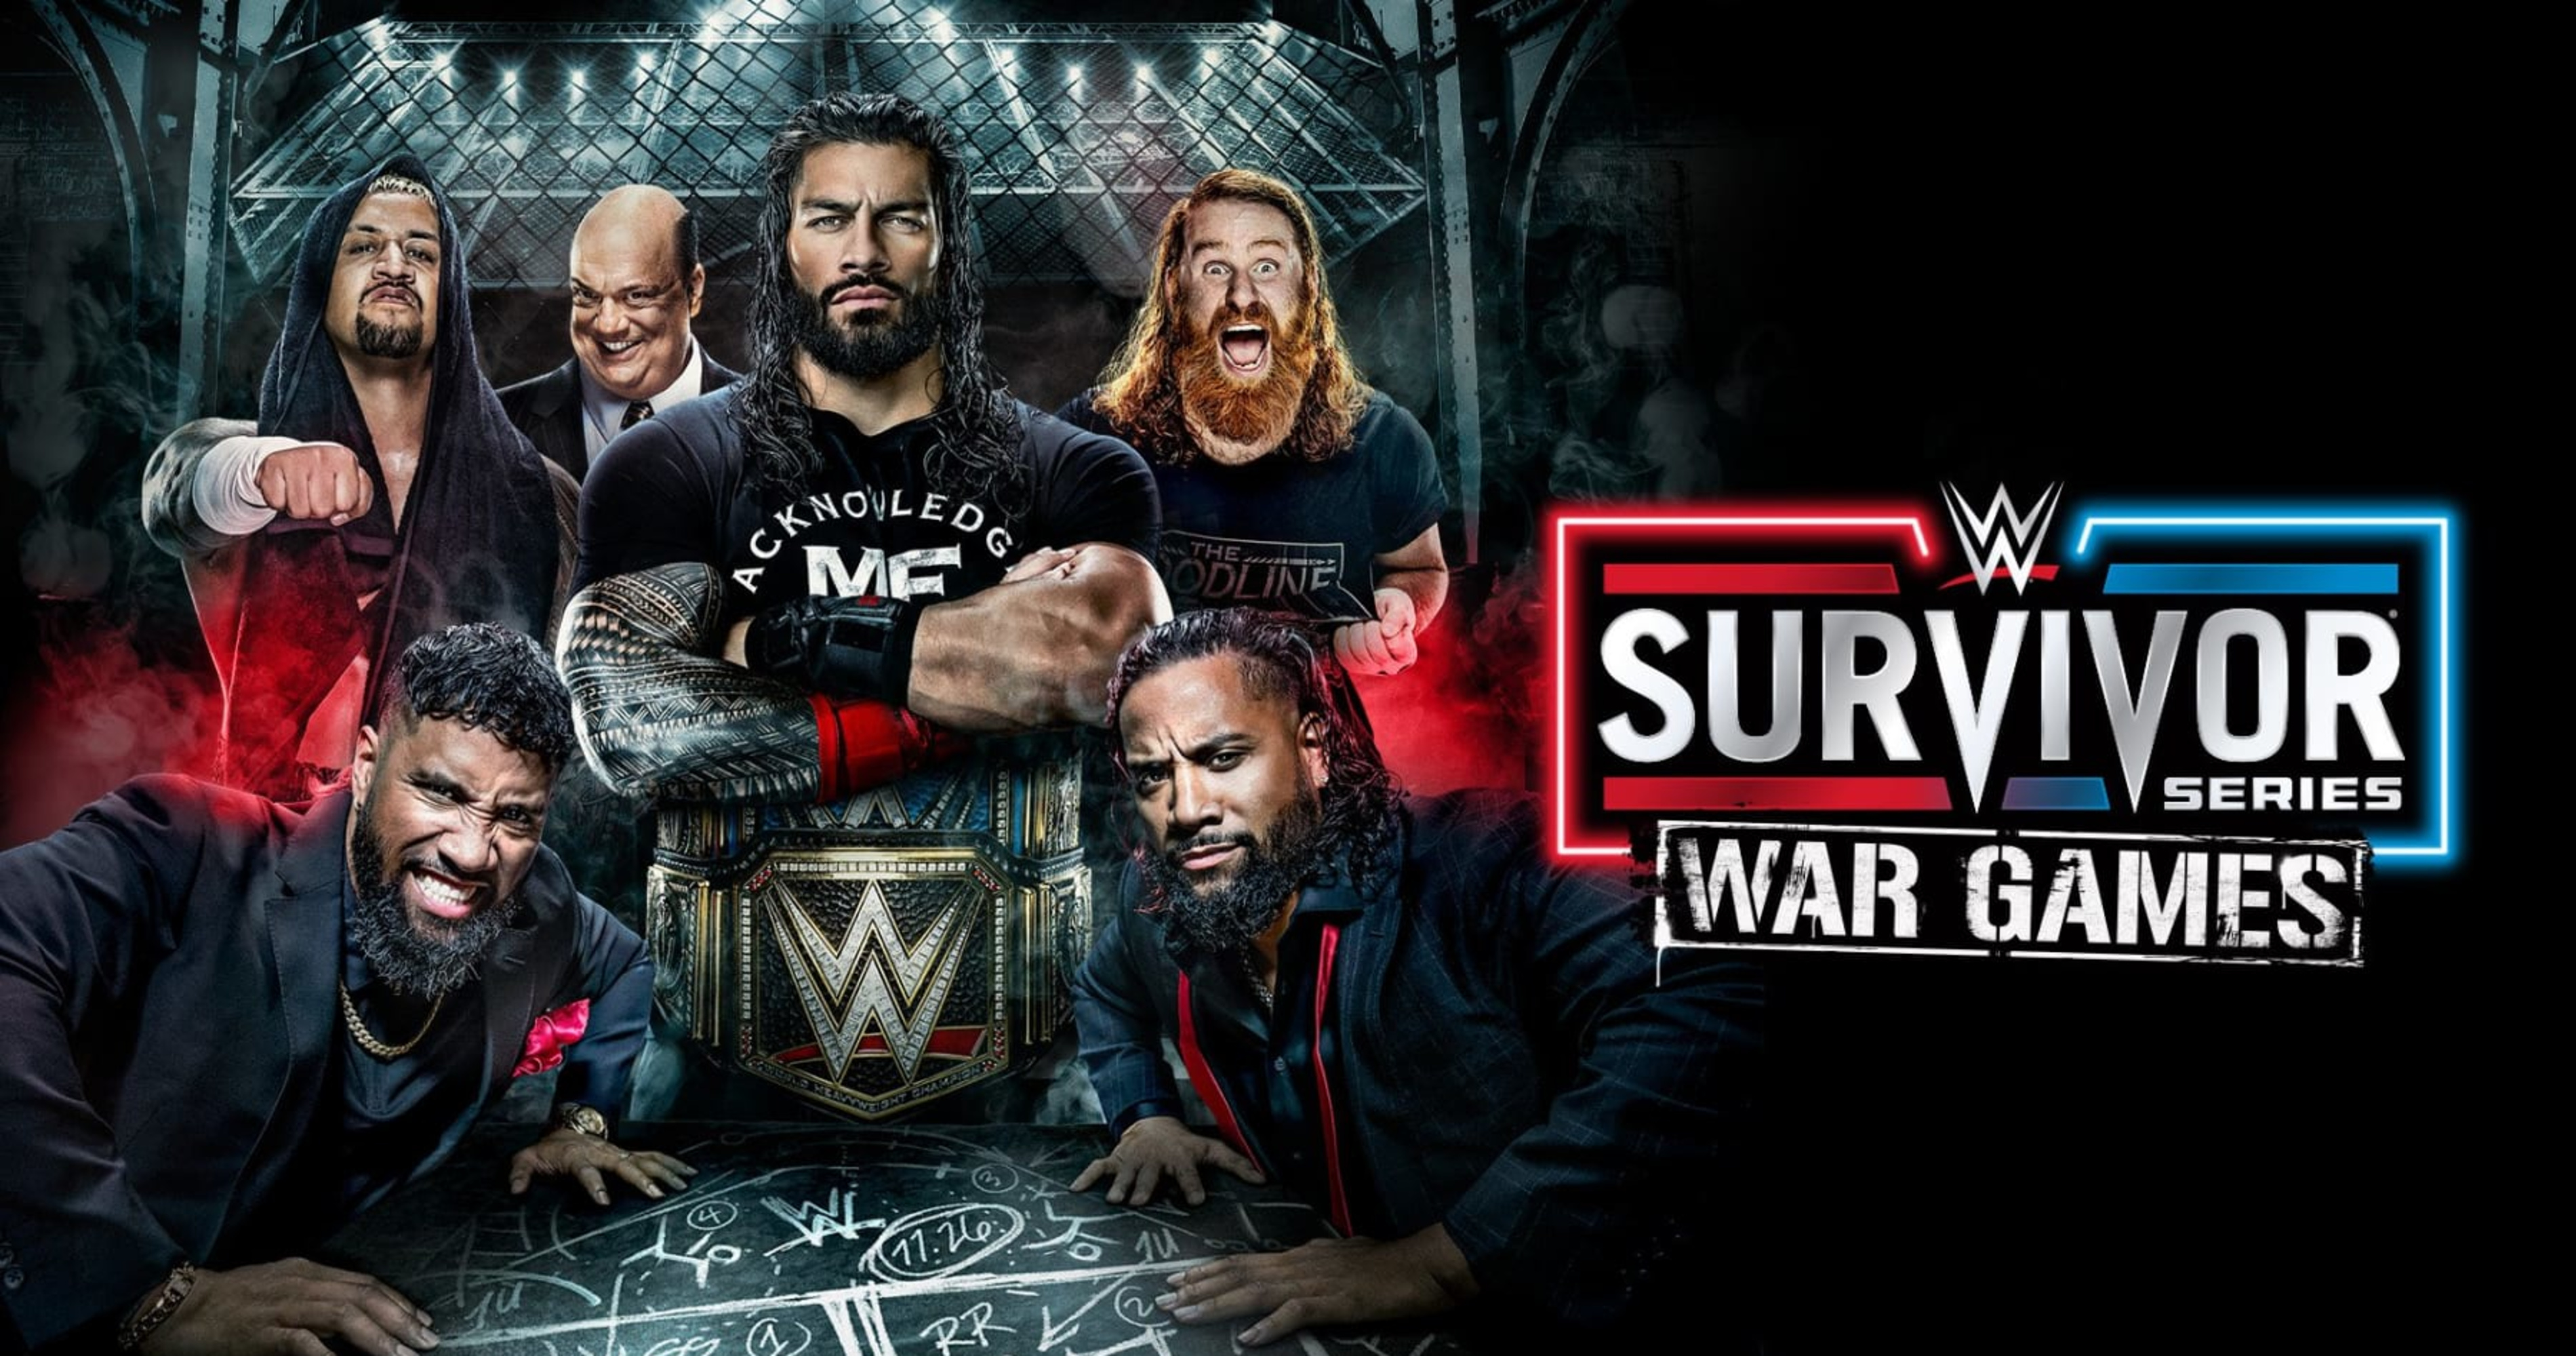 Final Picks for Roman Reigns, Bloodline and WWE Survivor Series